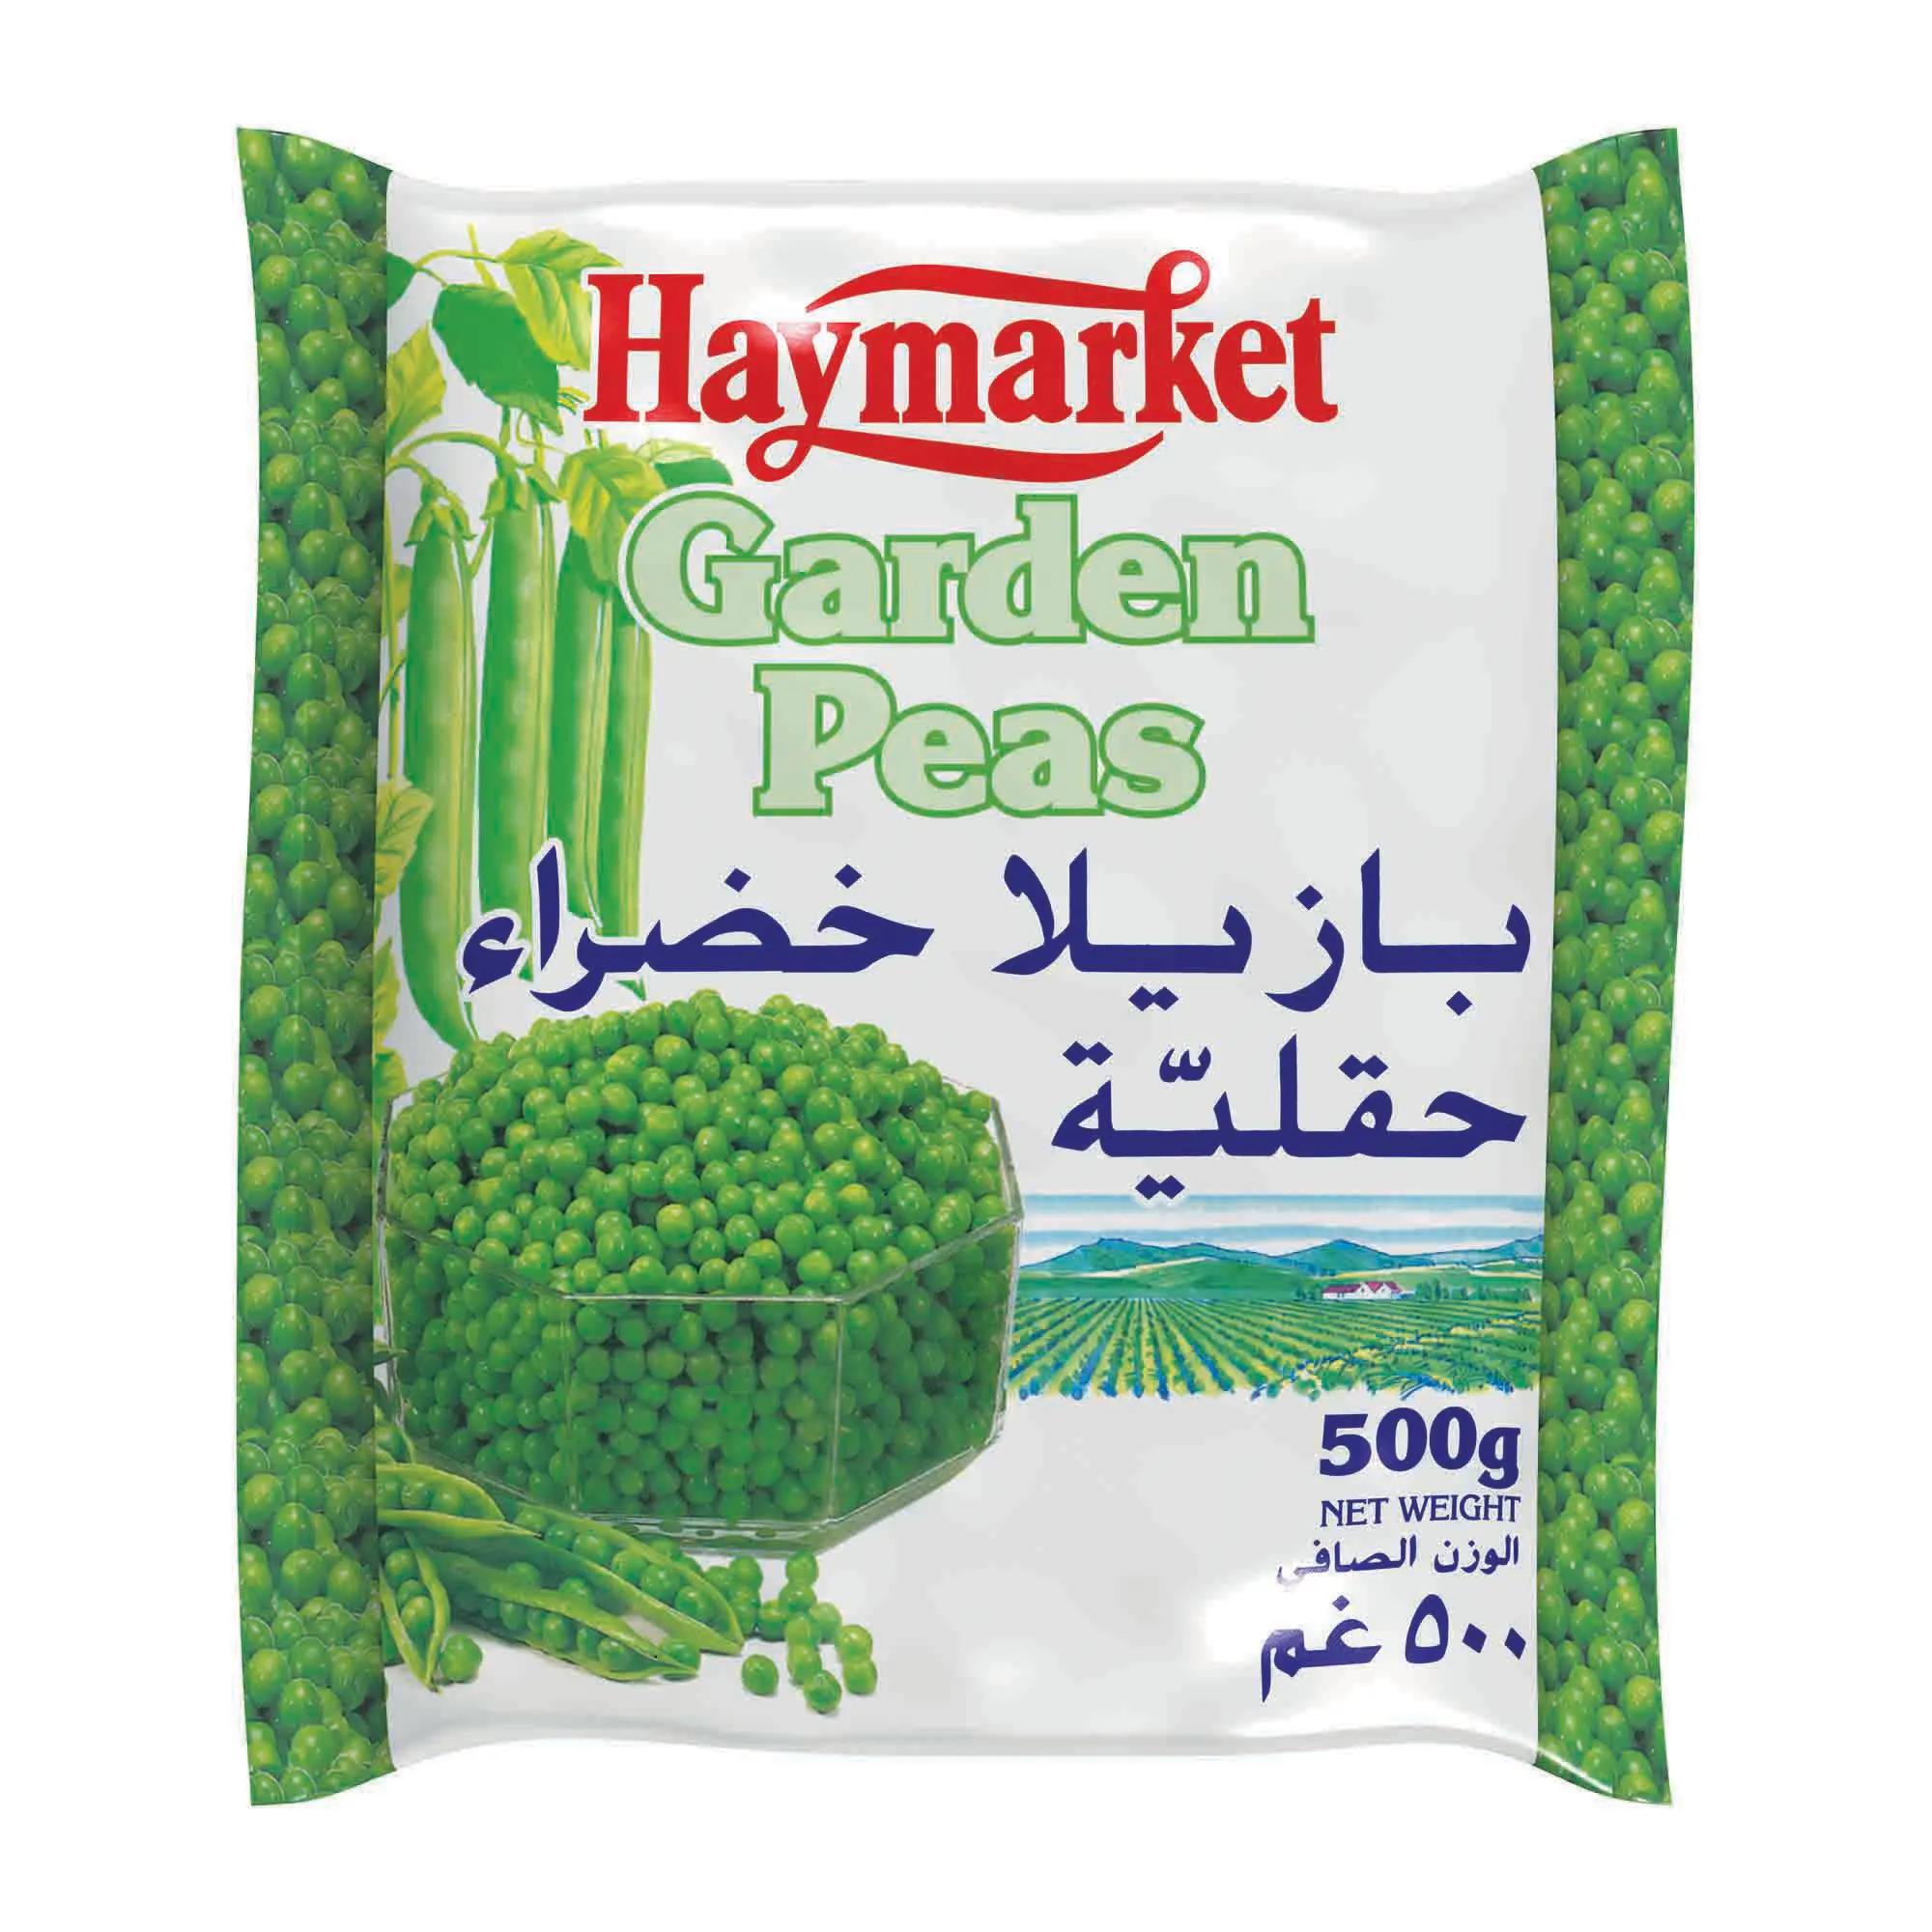 KAC - HAYMARKET GREEN PEAS N.ZLND 500 gm